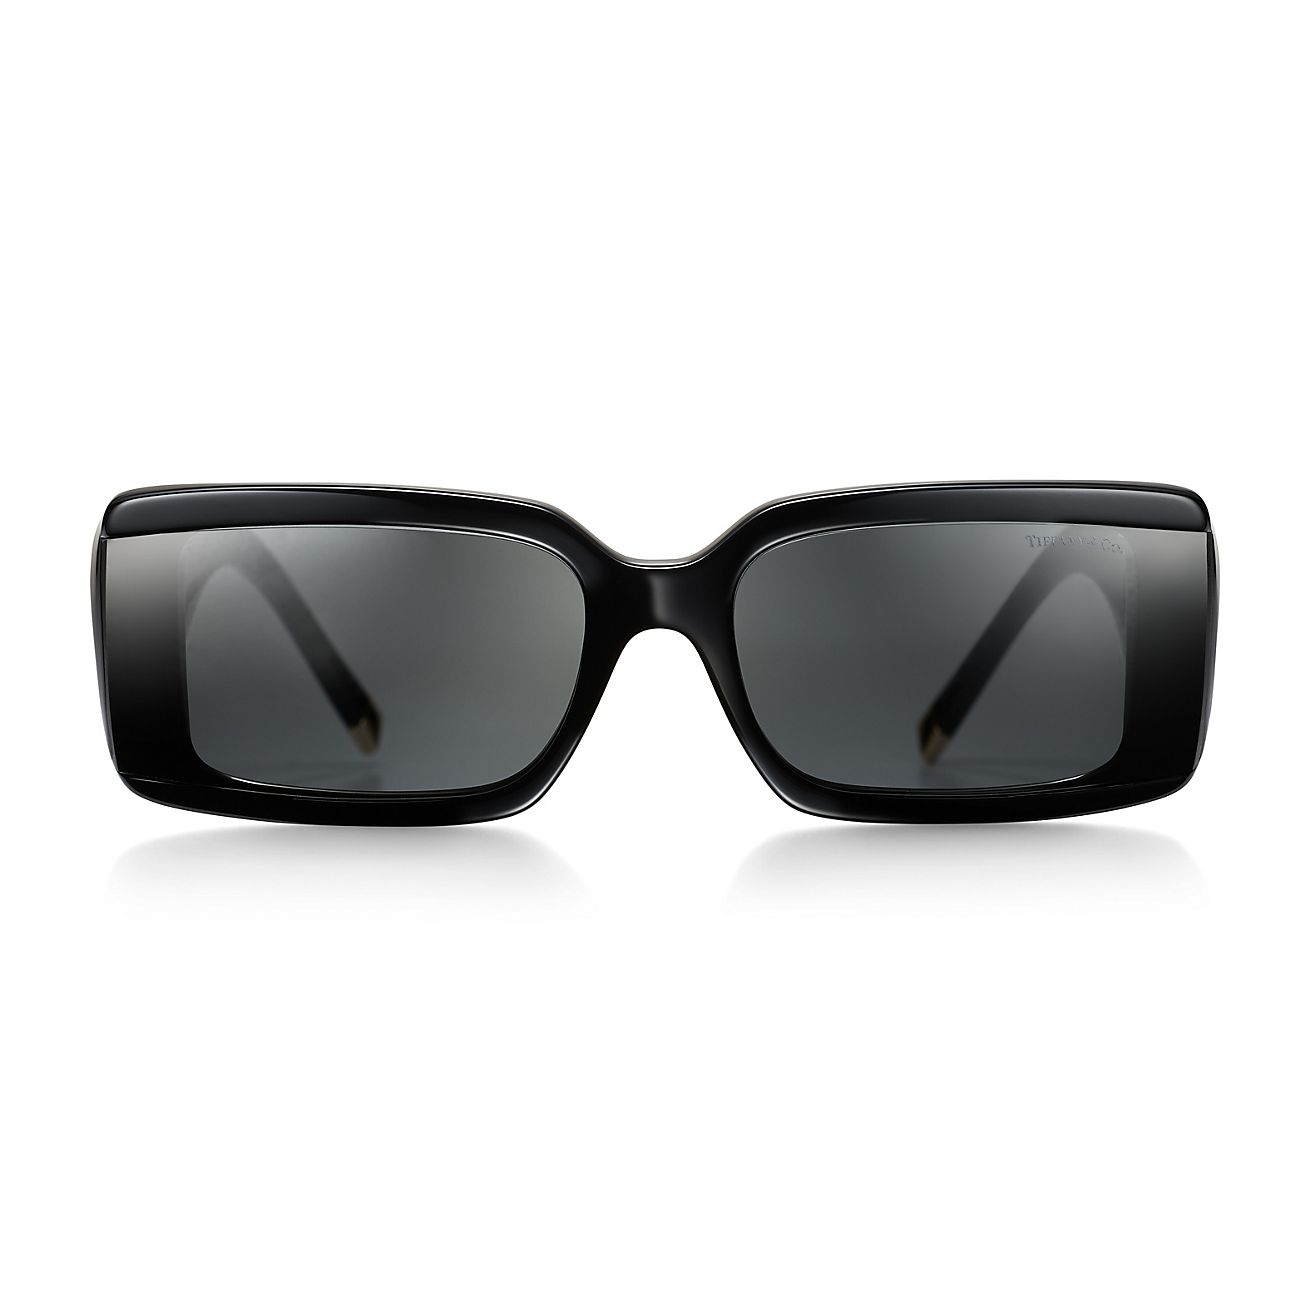 Tiffany T Sunglasses in Black Acetate with Dark Gray Lenses 